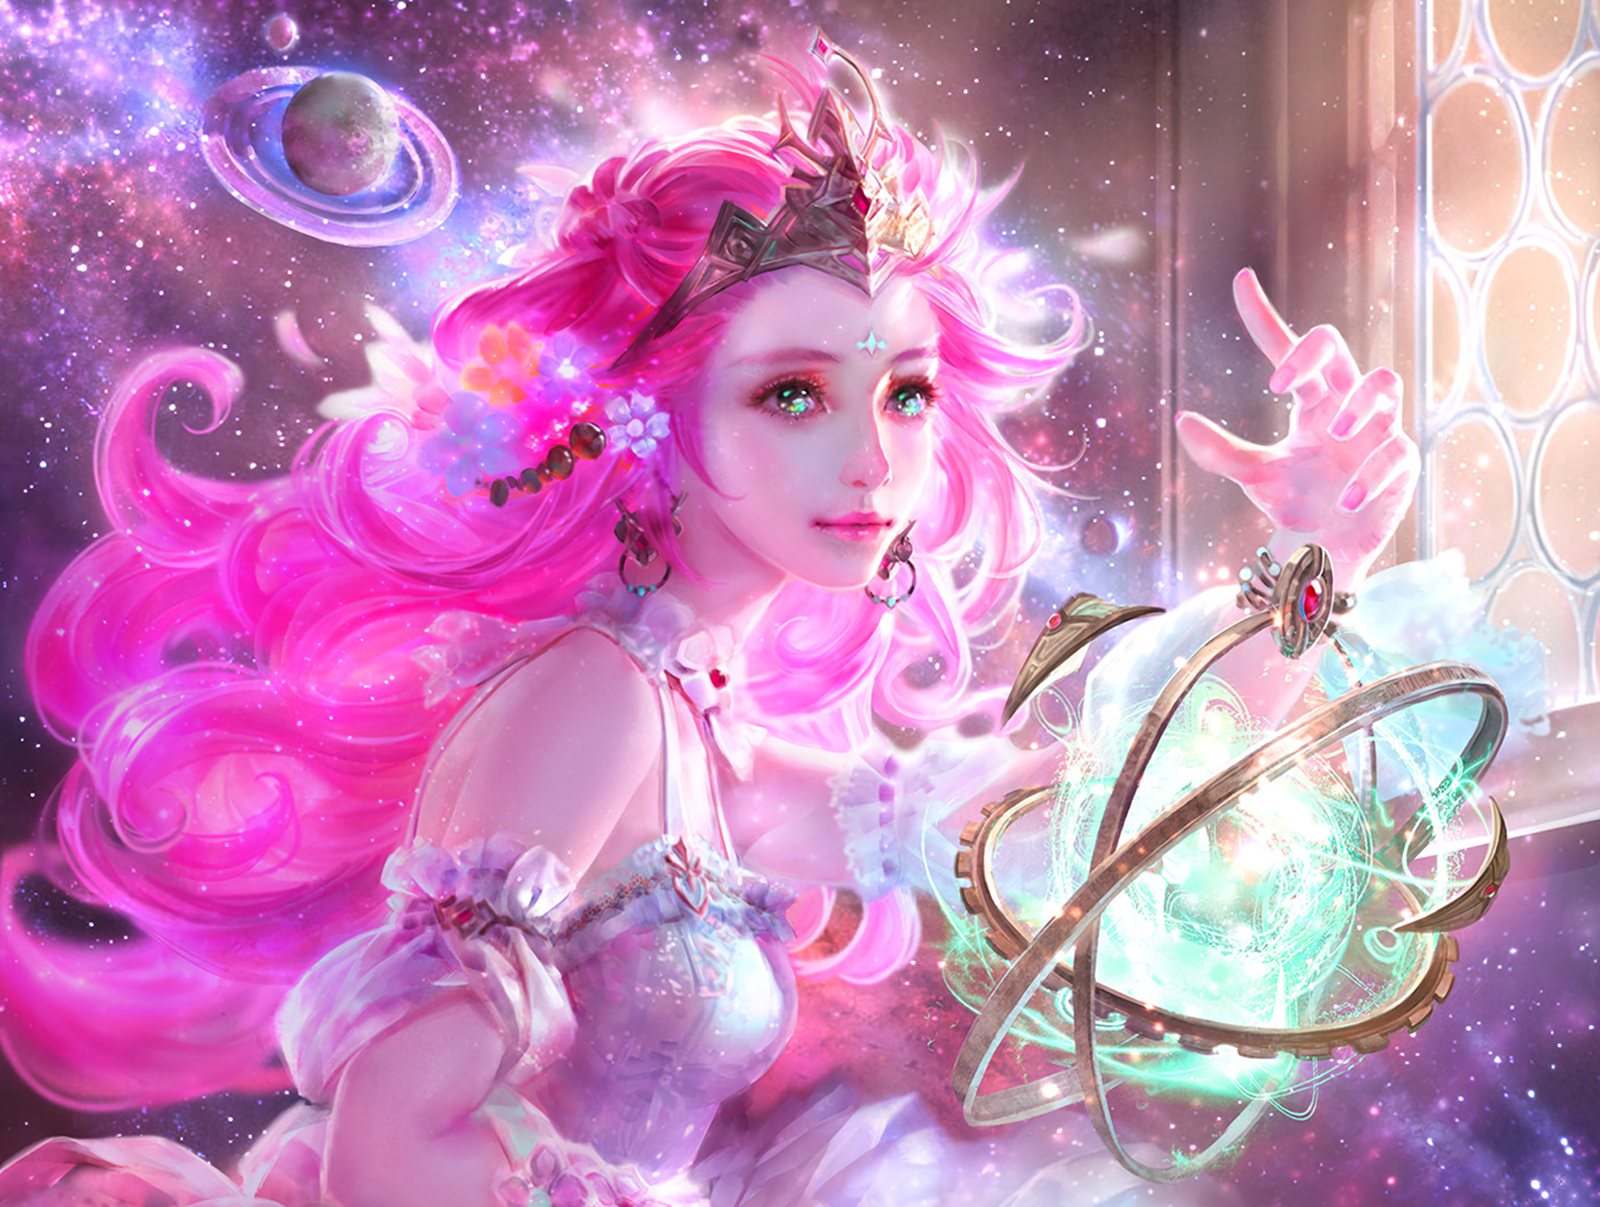 Fantasy Princess by Yu-Han Chen